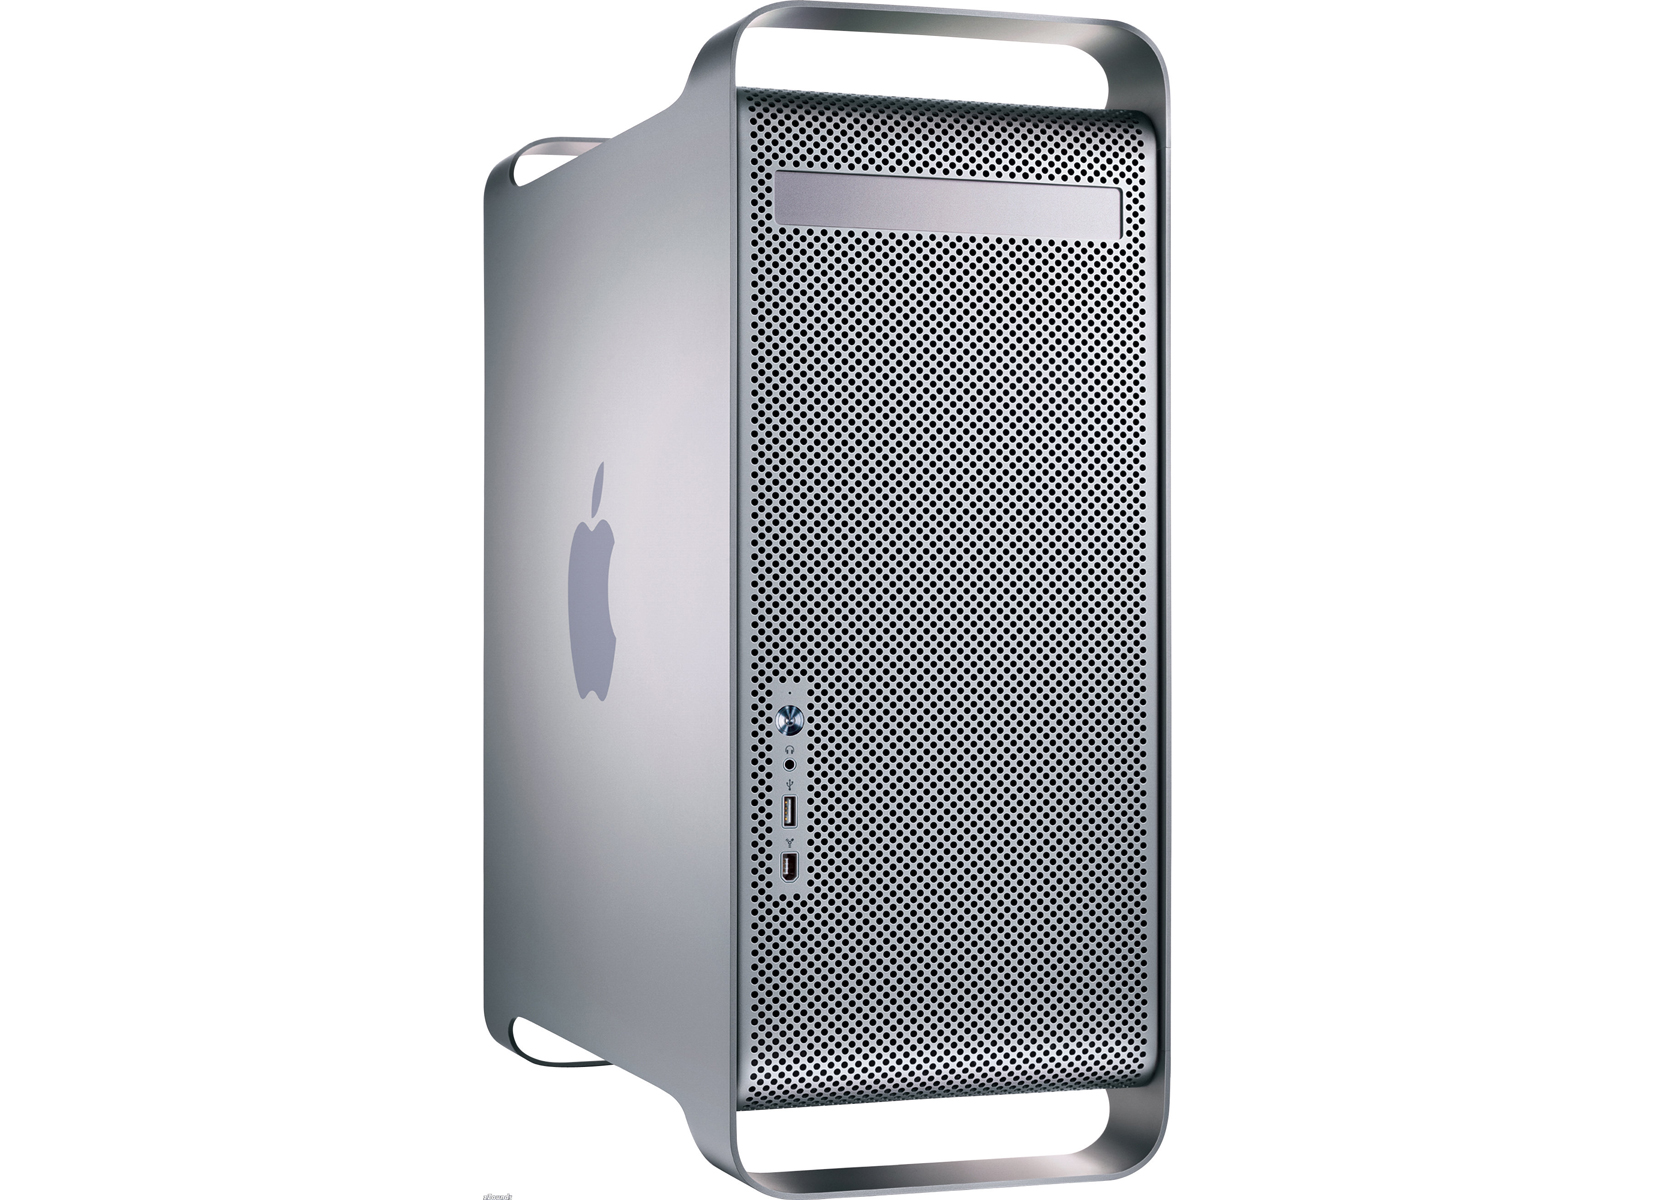 Inside power mac g5